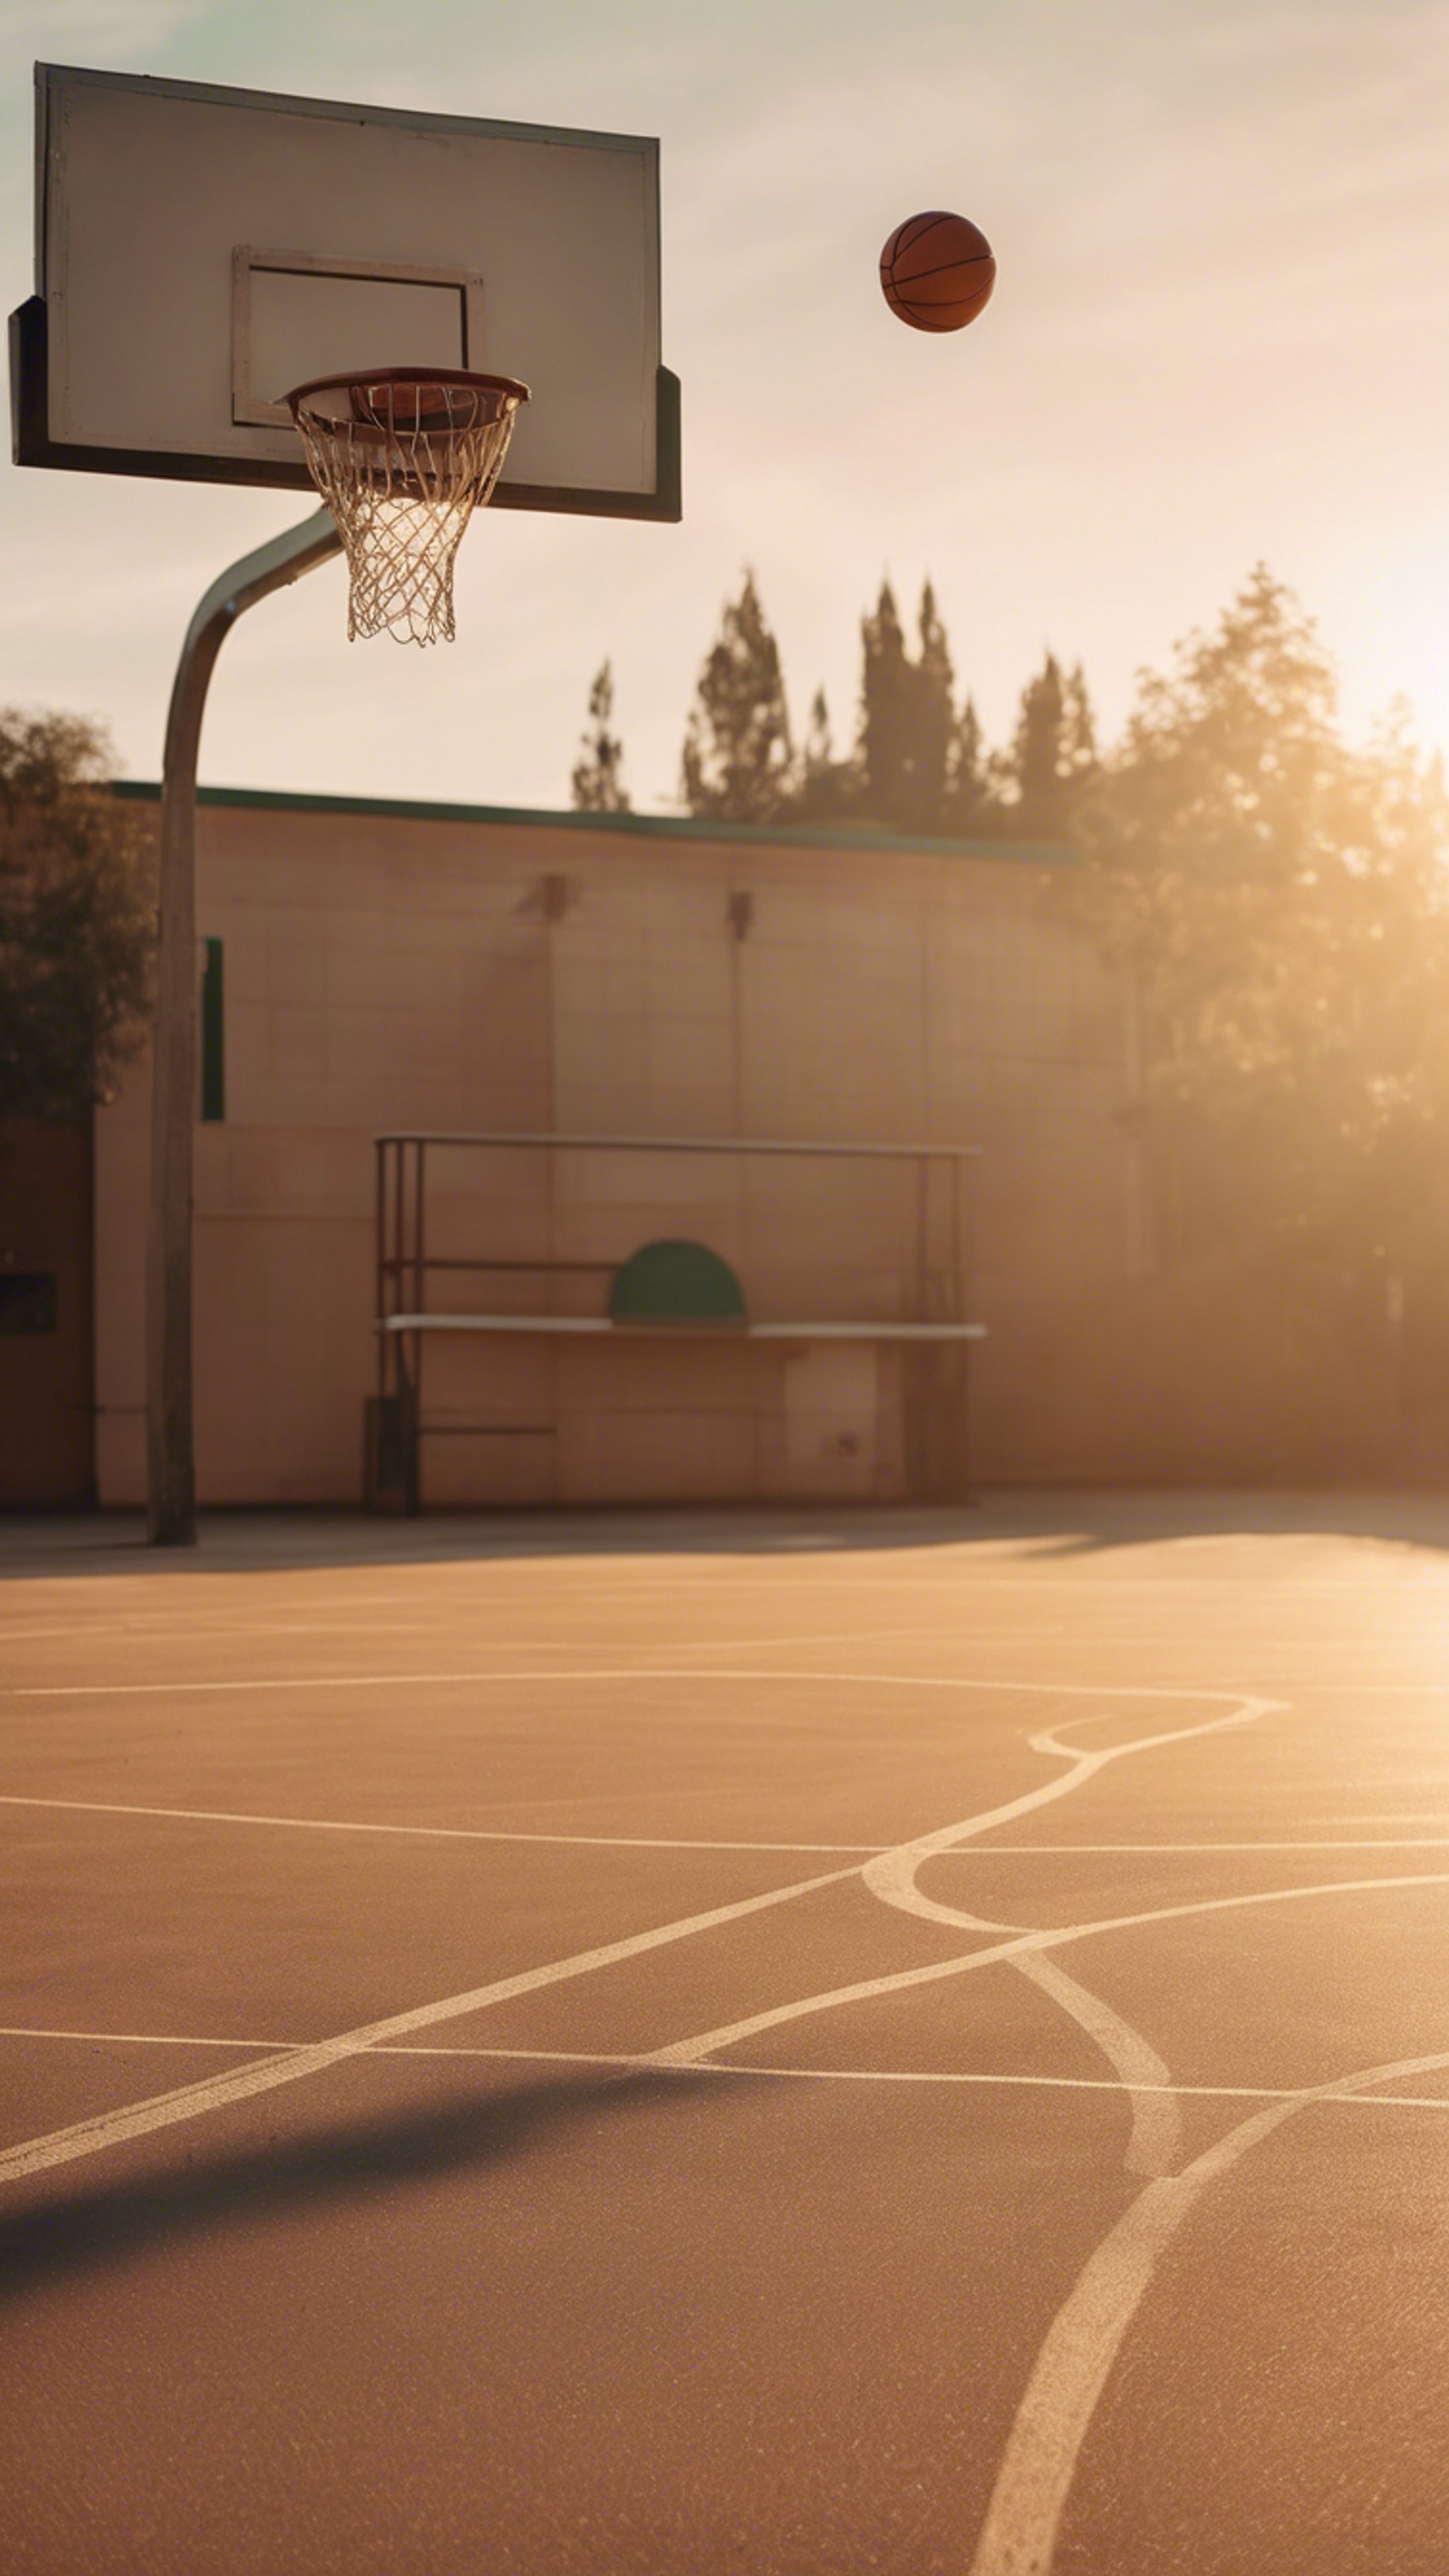 A deserted school’s basketball court in the pacific golden light of sunset. Tapet[5d35315ab9de41dcbc38]